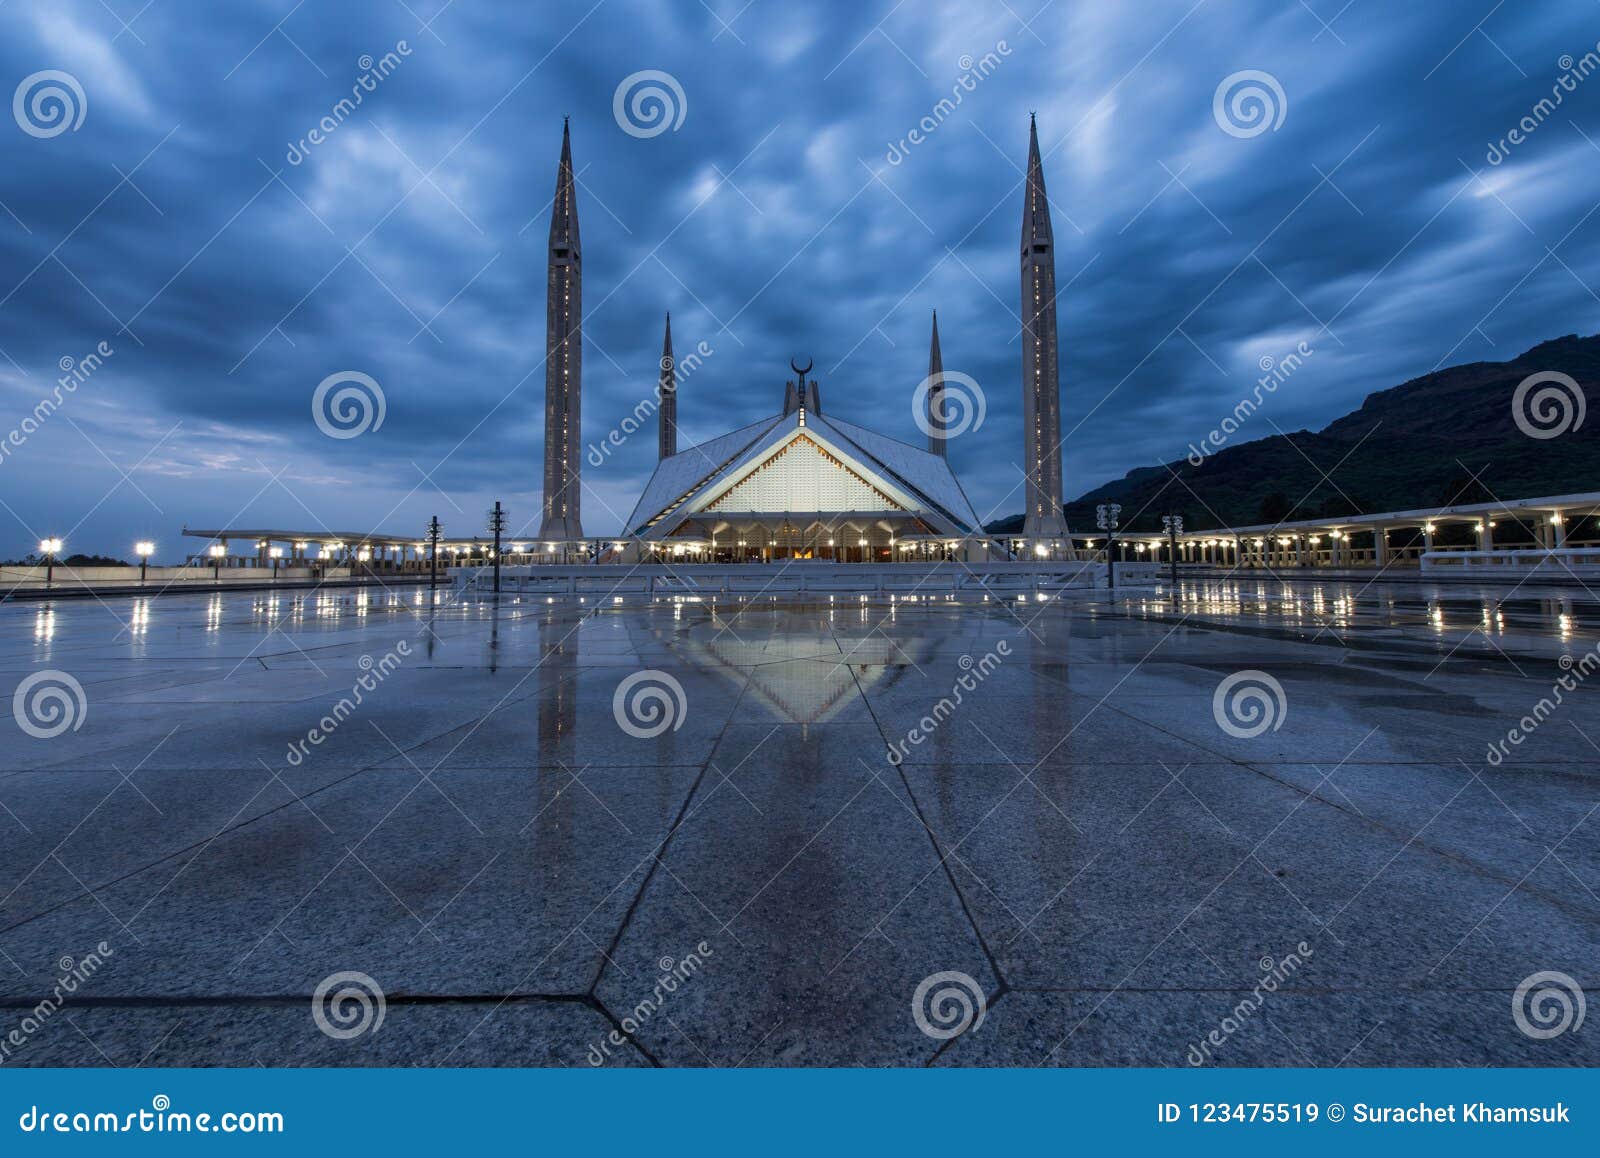 the shah faisal mosque masjid at twilight, the modern islamic